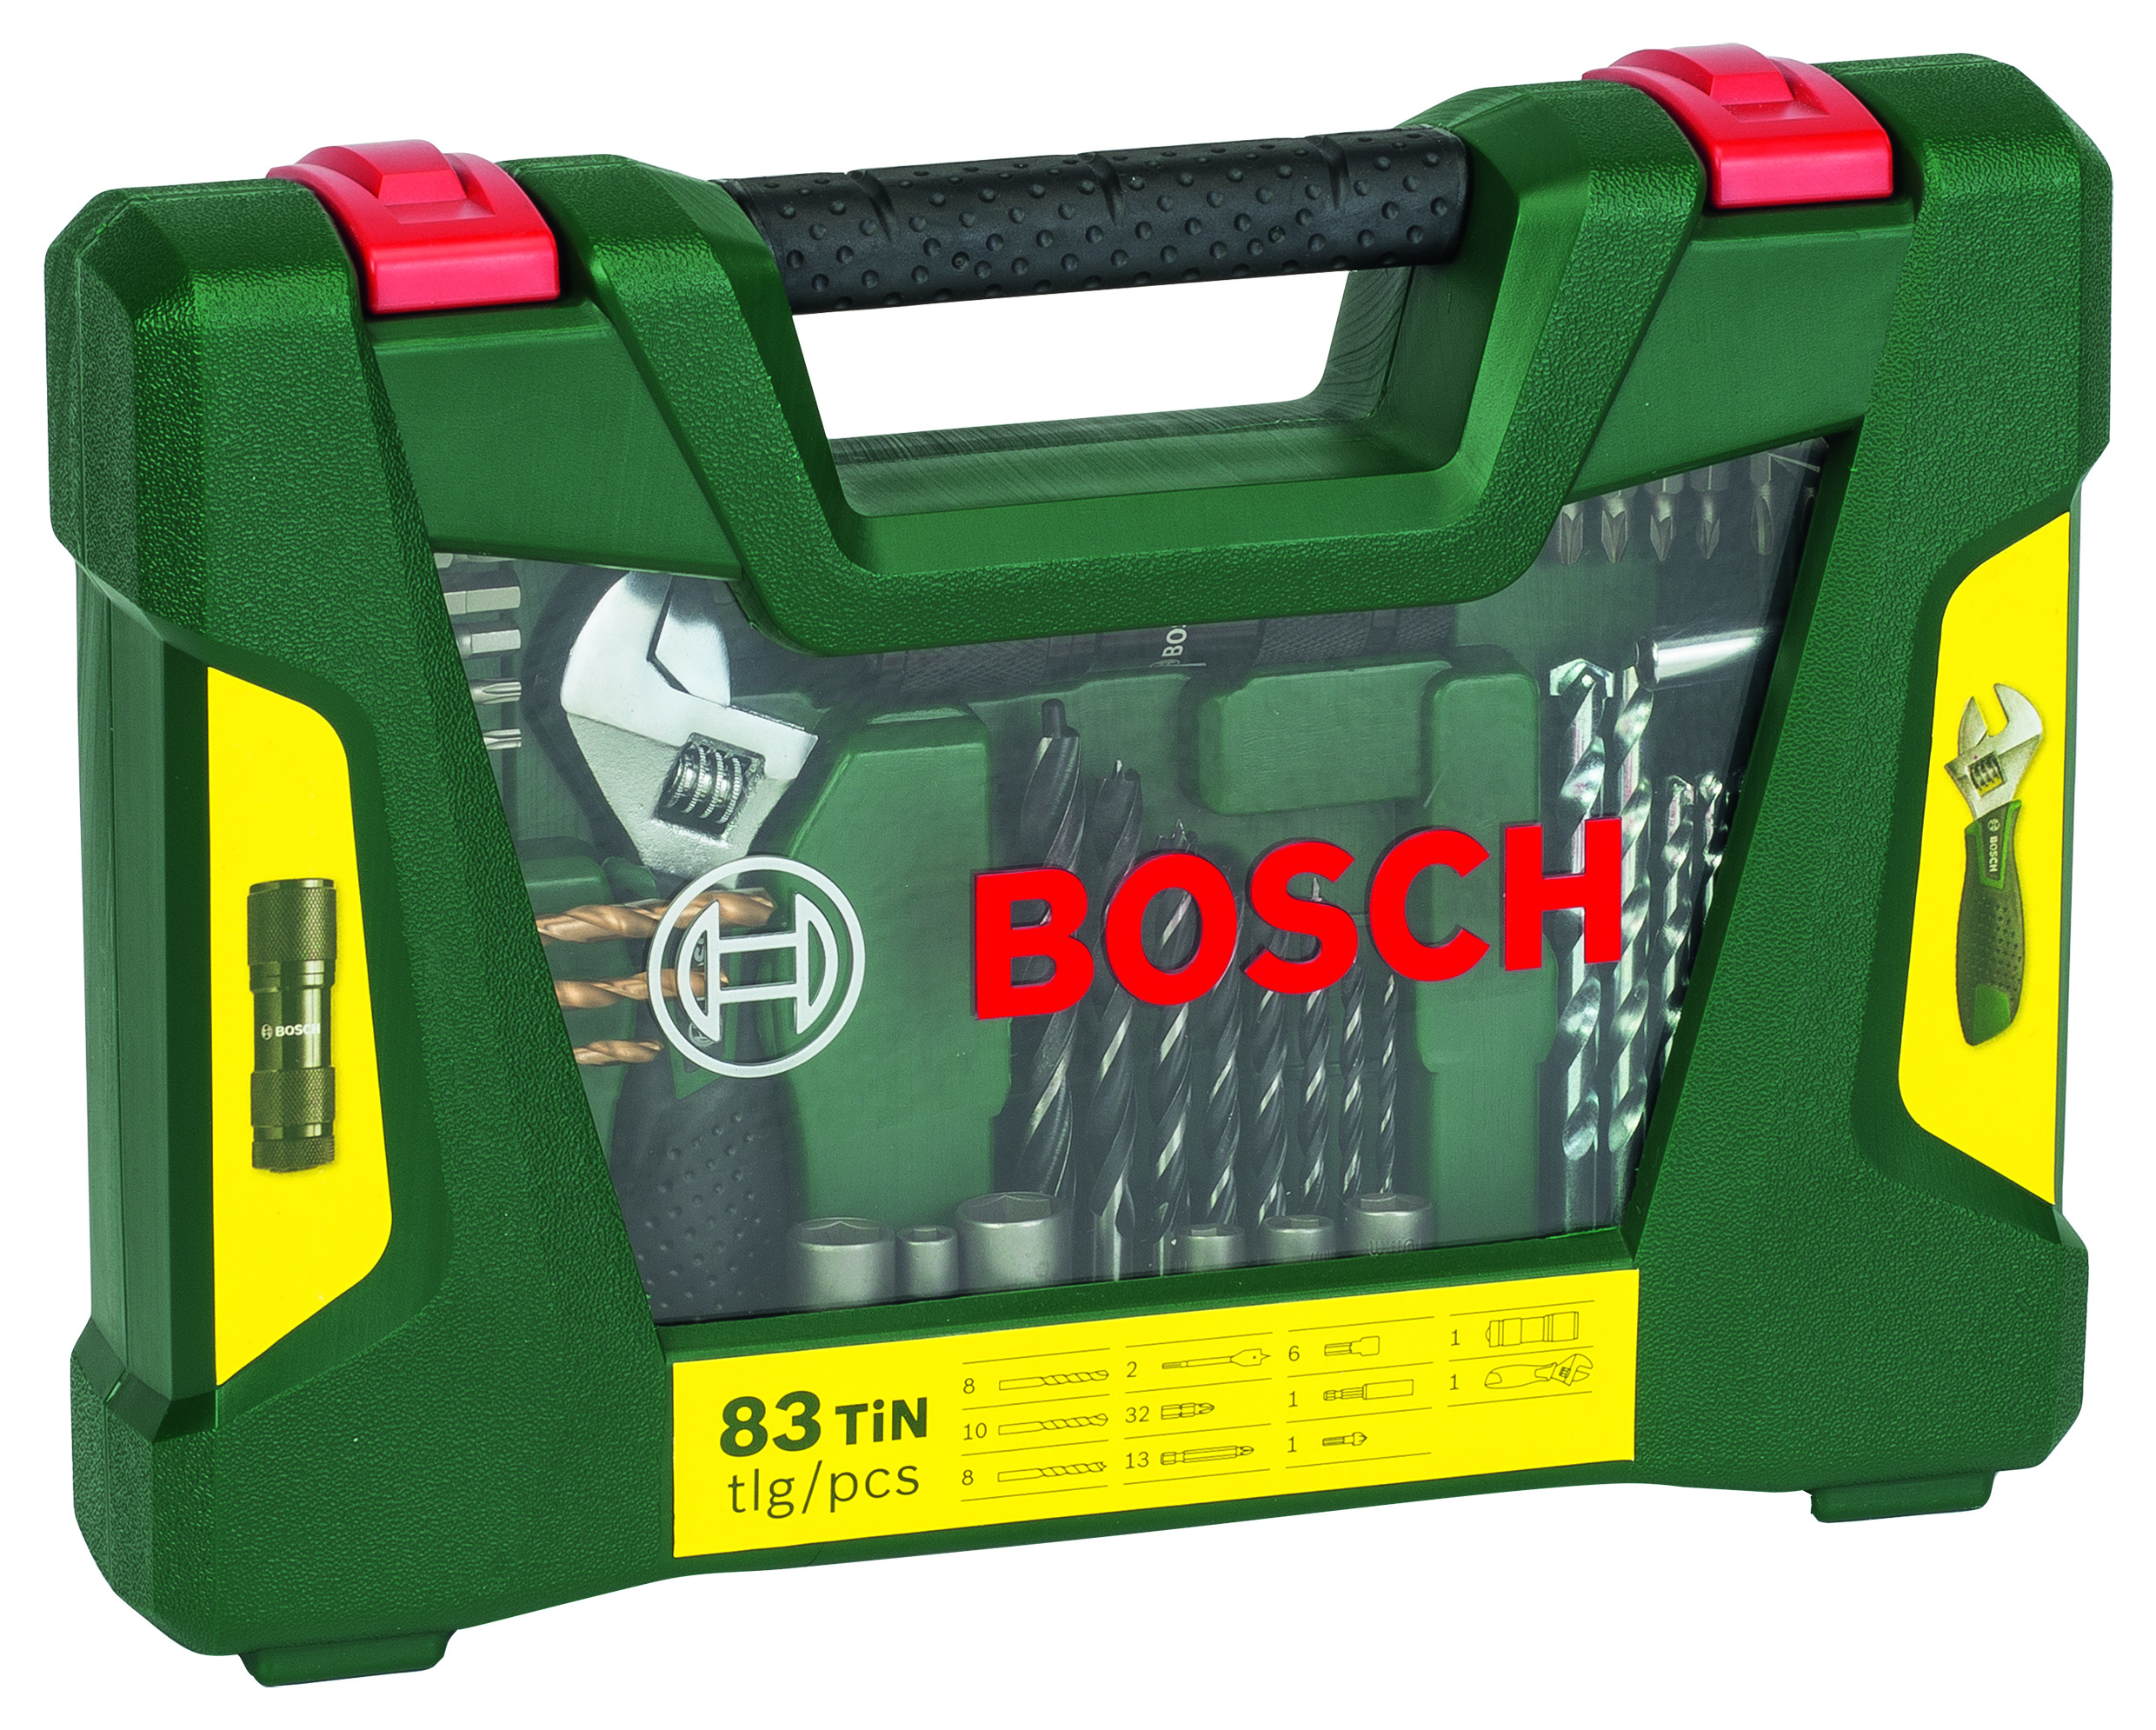 Bosch TiN-Bohrer- und Bit-Set, 83-teilig V-Line inkl. Taschenlampe